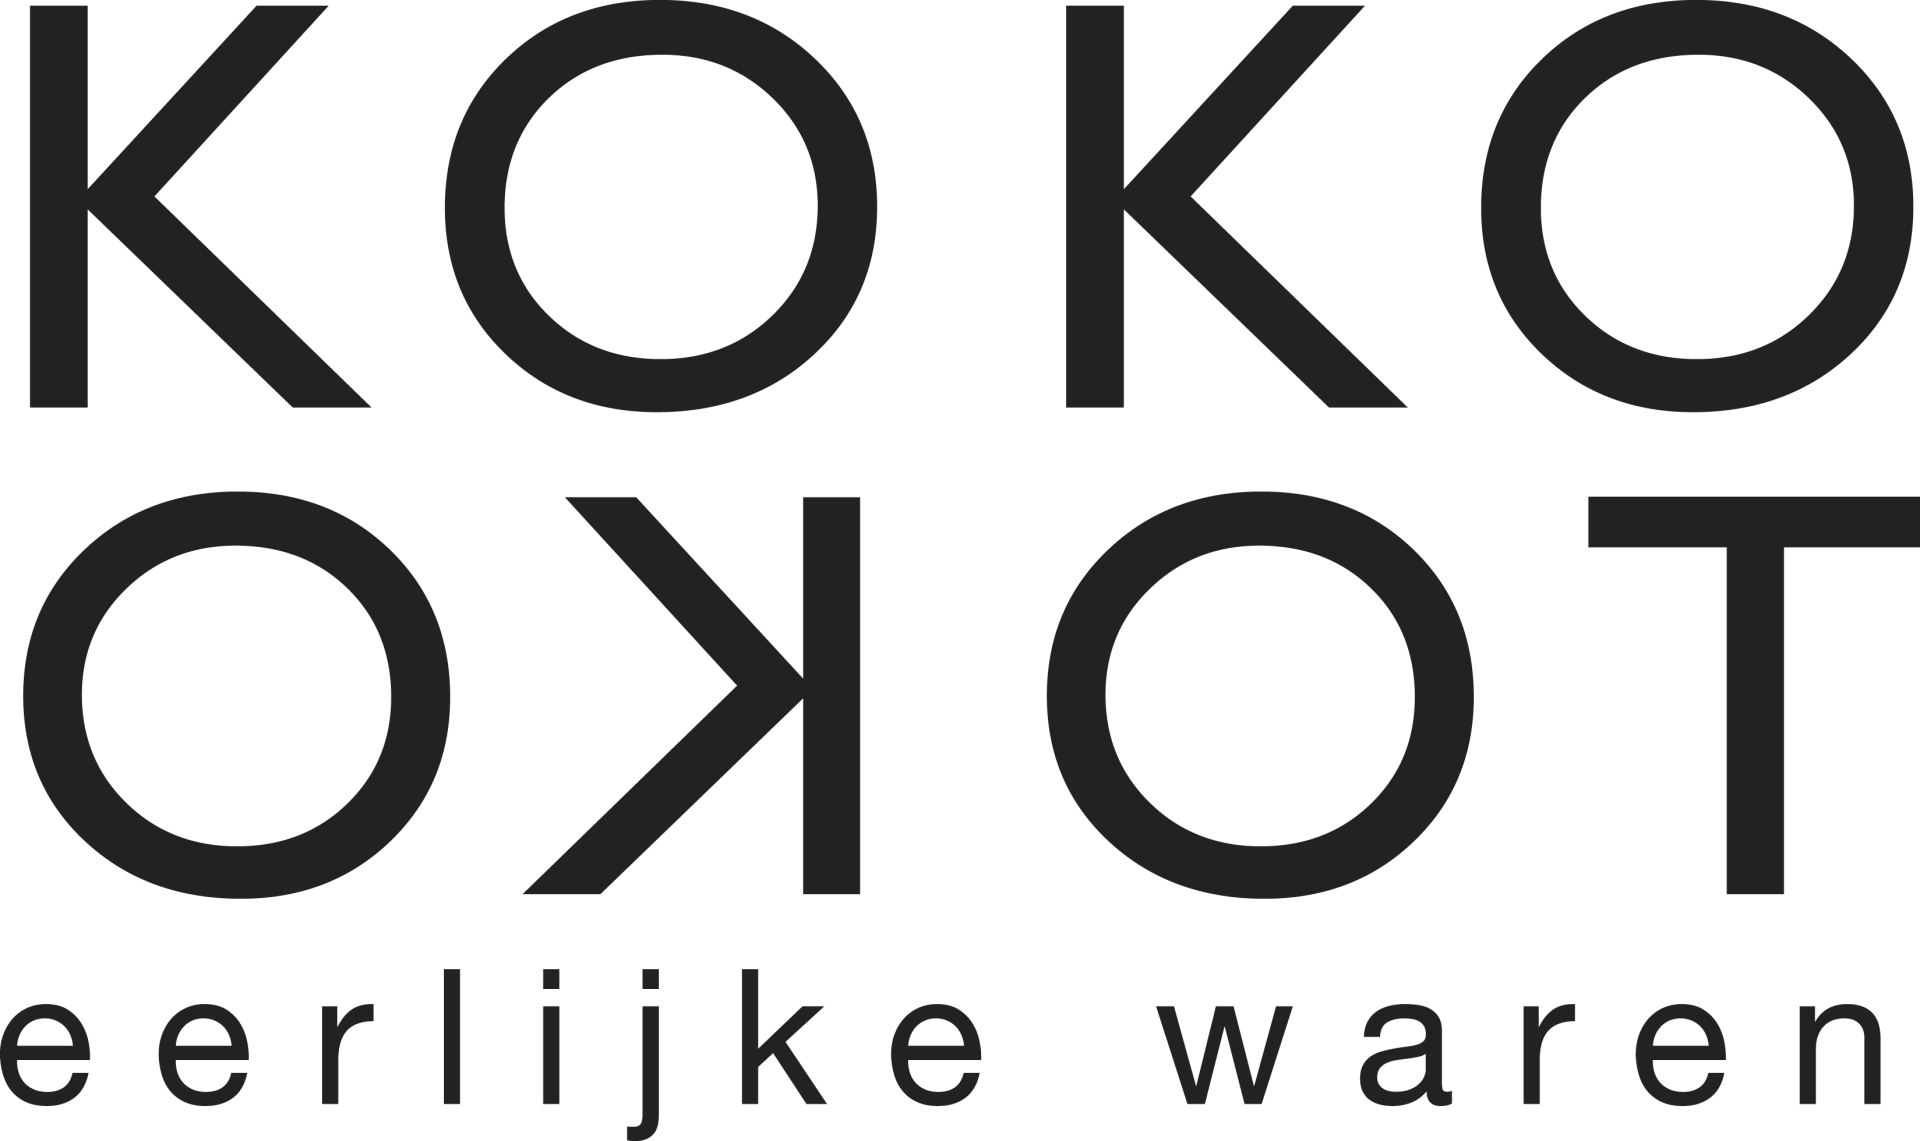 KOKO-logo-plus-underline-STAND-ALONE.png